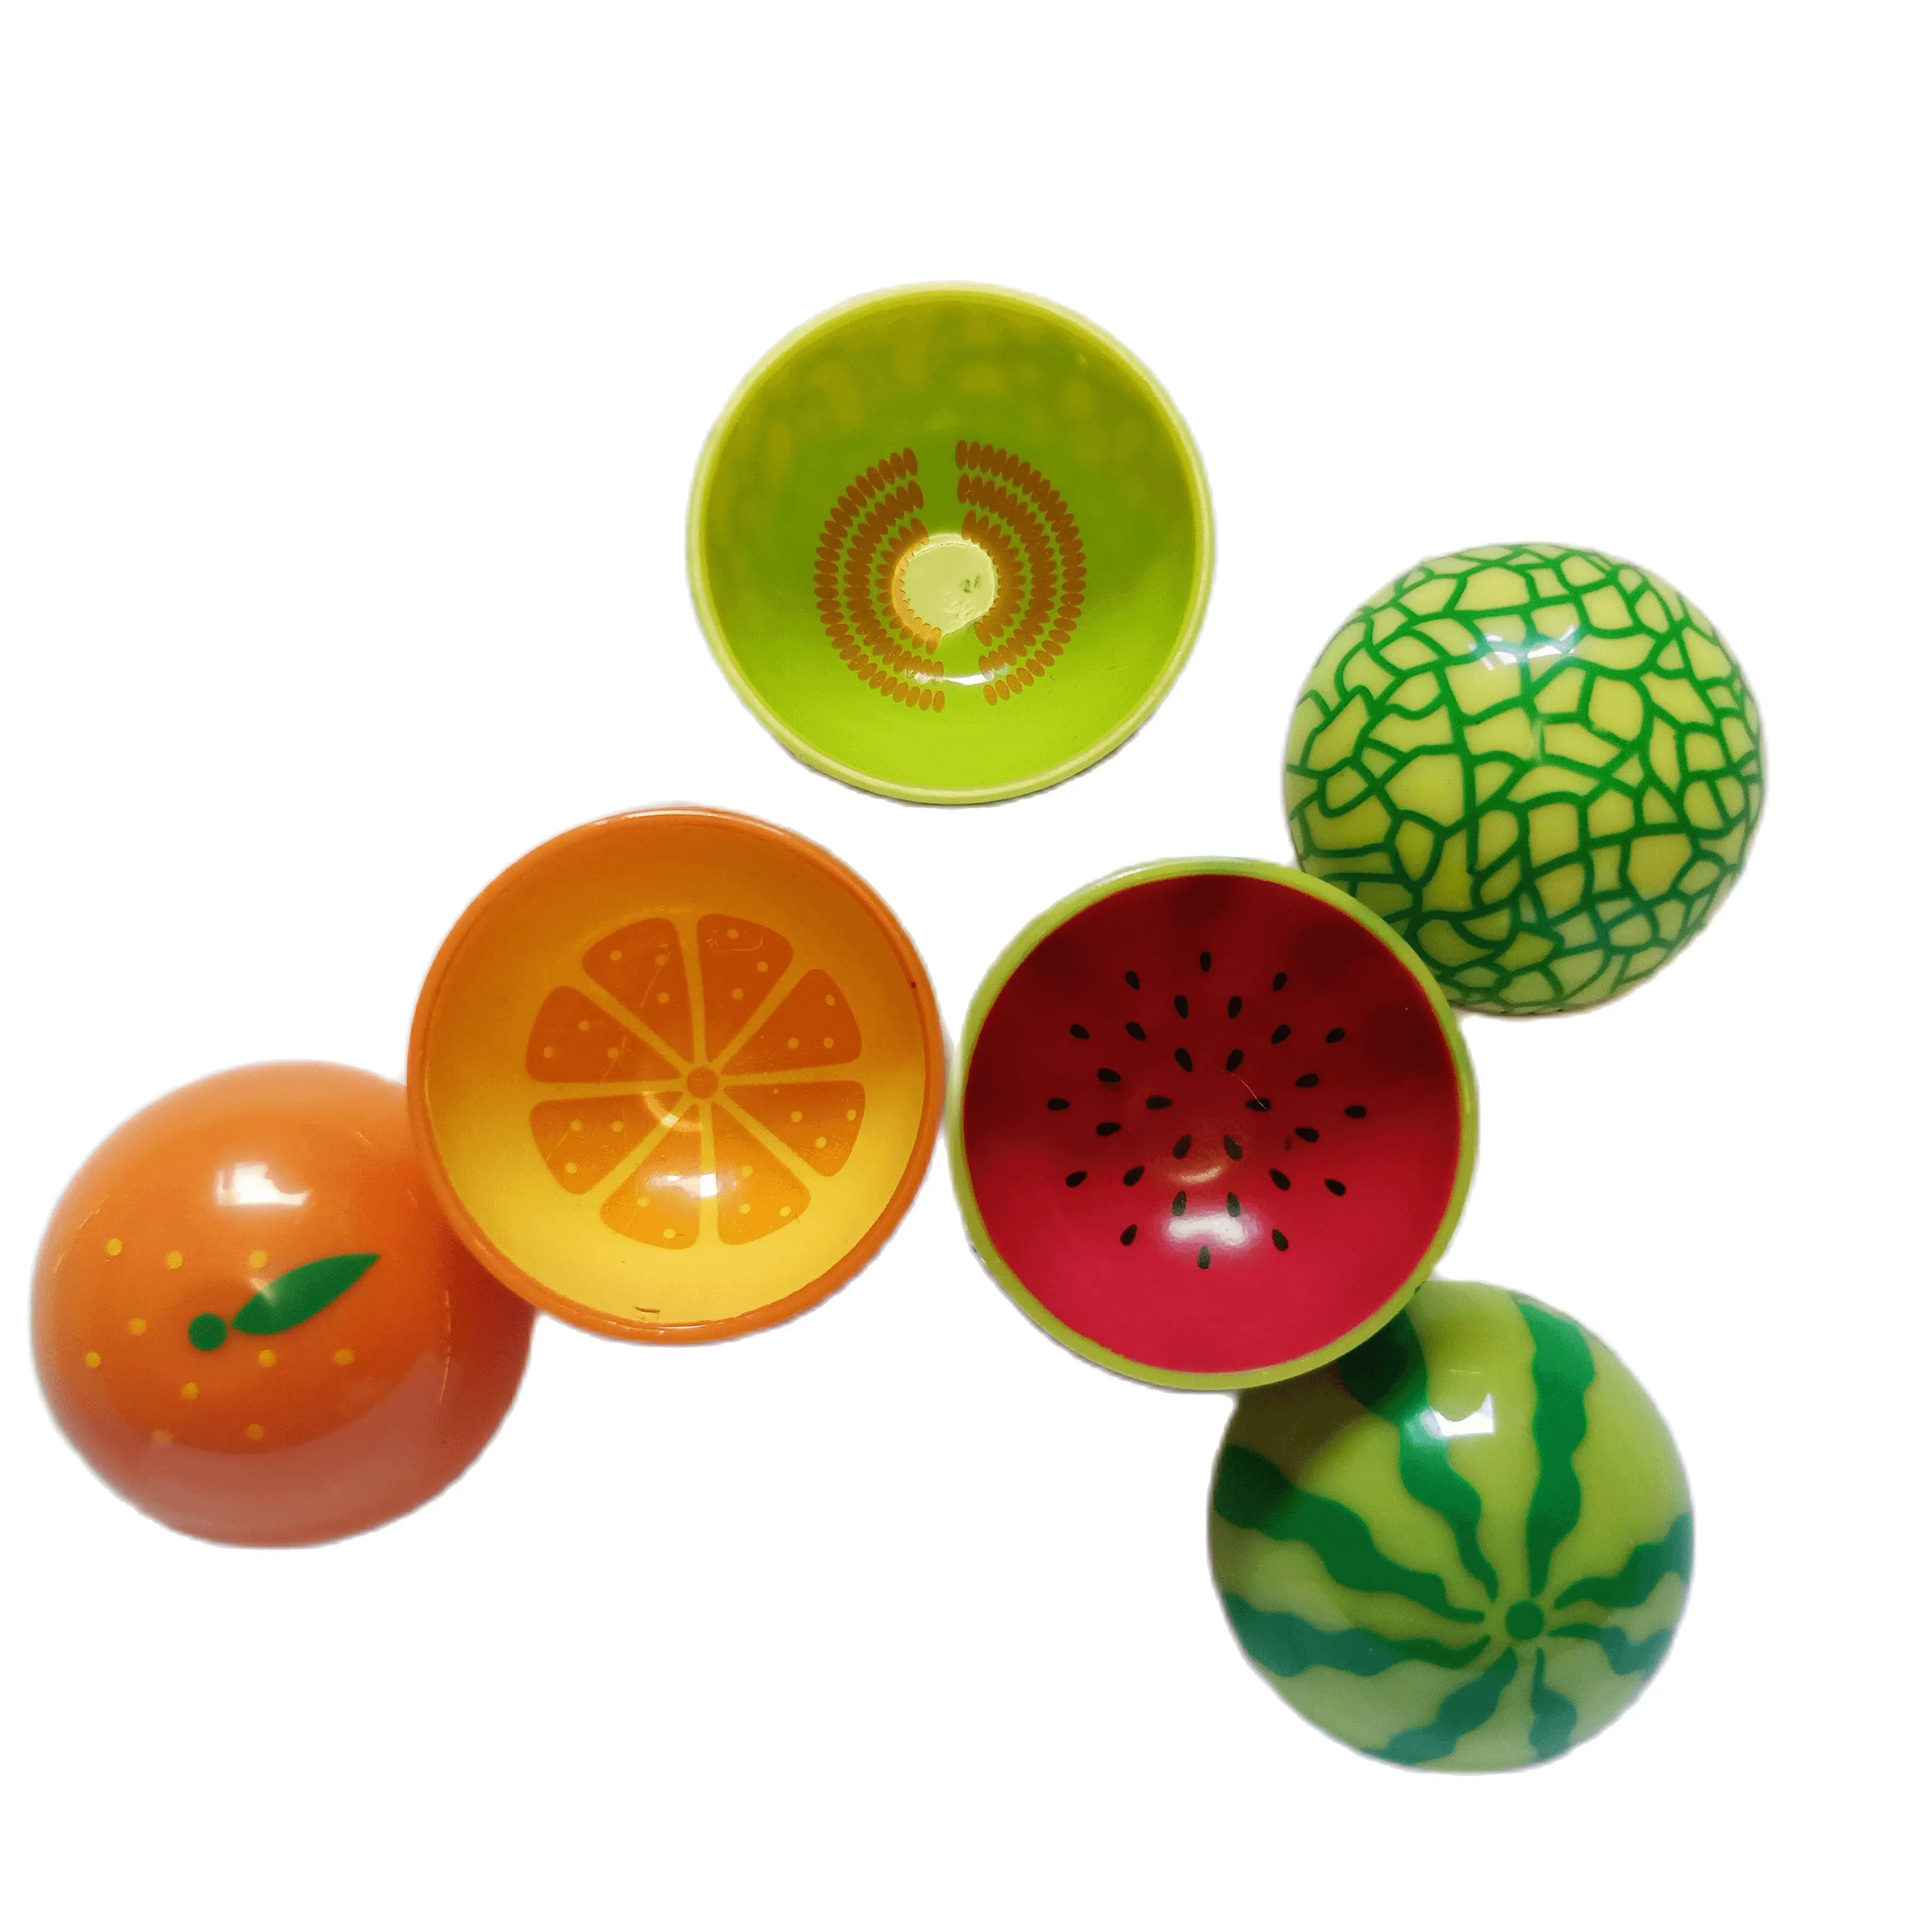 20PCS/LOT Cute mini bowls watermelon orange shape round plastic crafts DIY miniature Kitchenware home decoration #DIY070